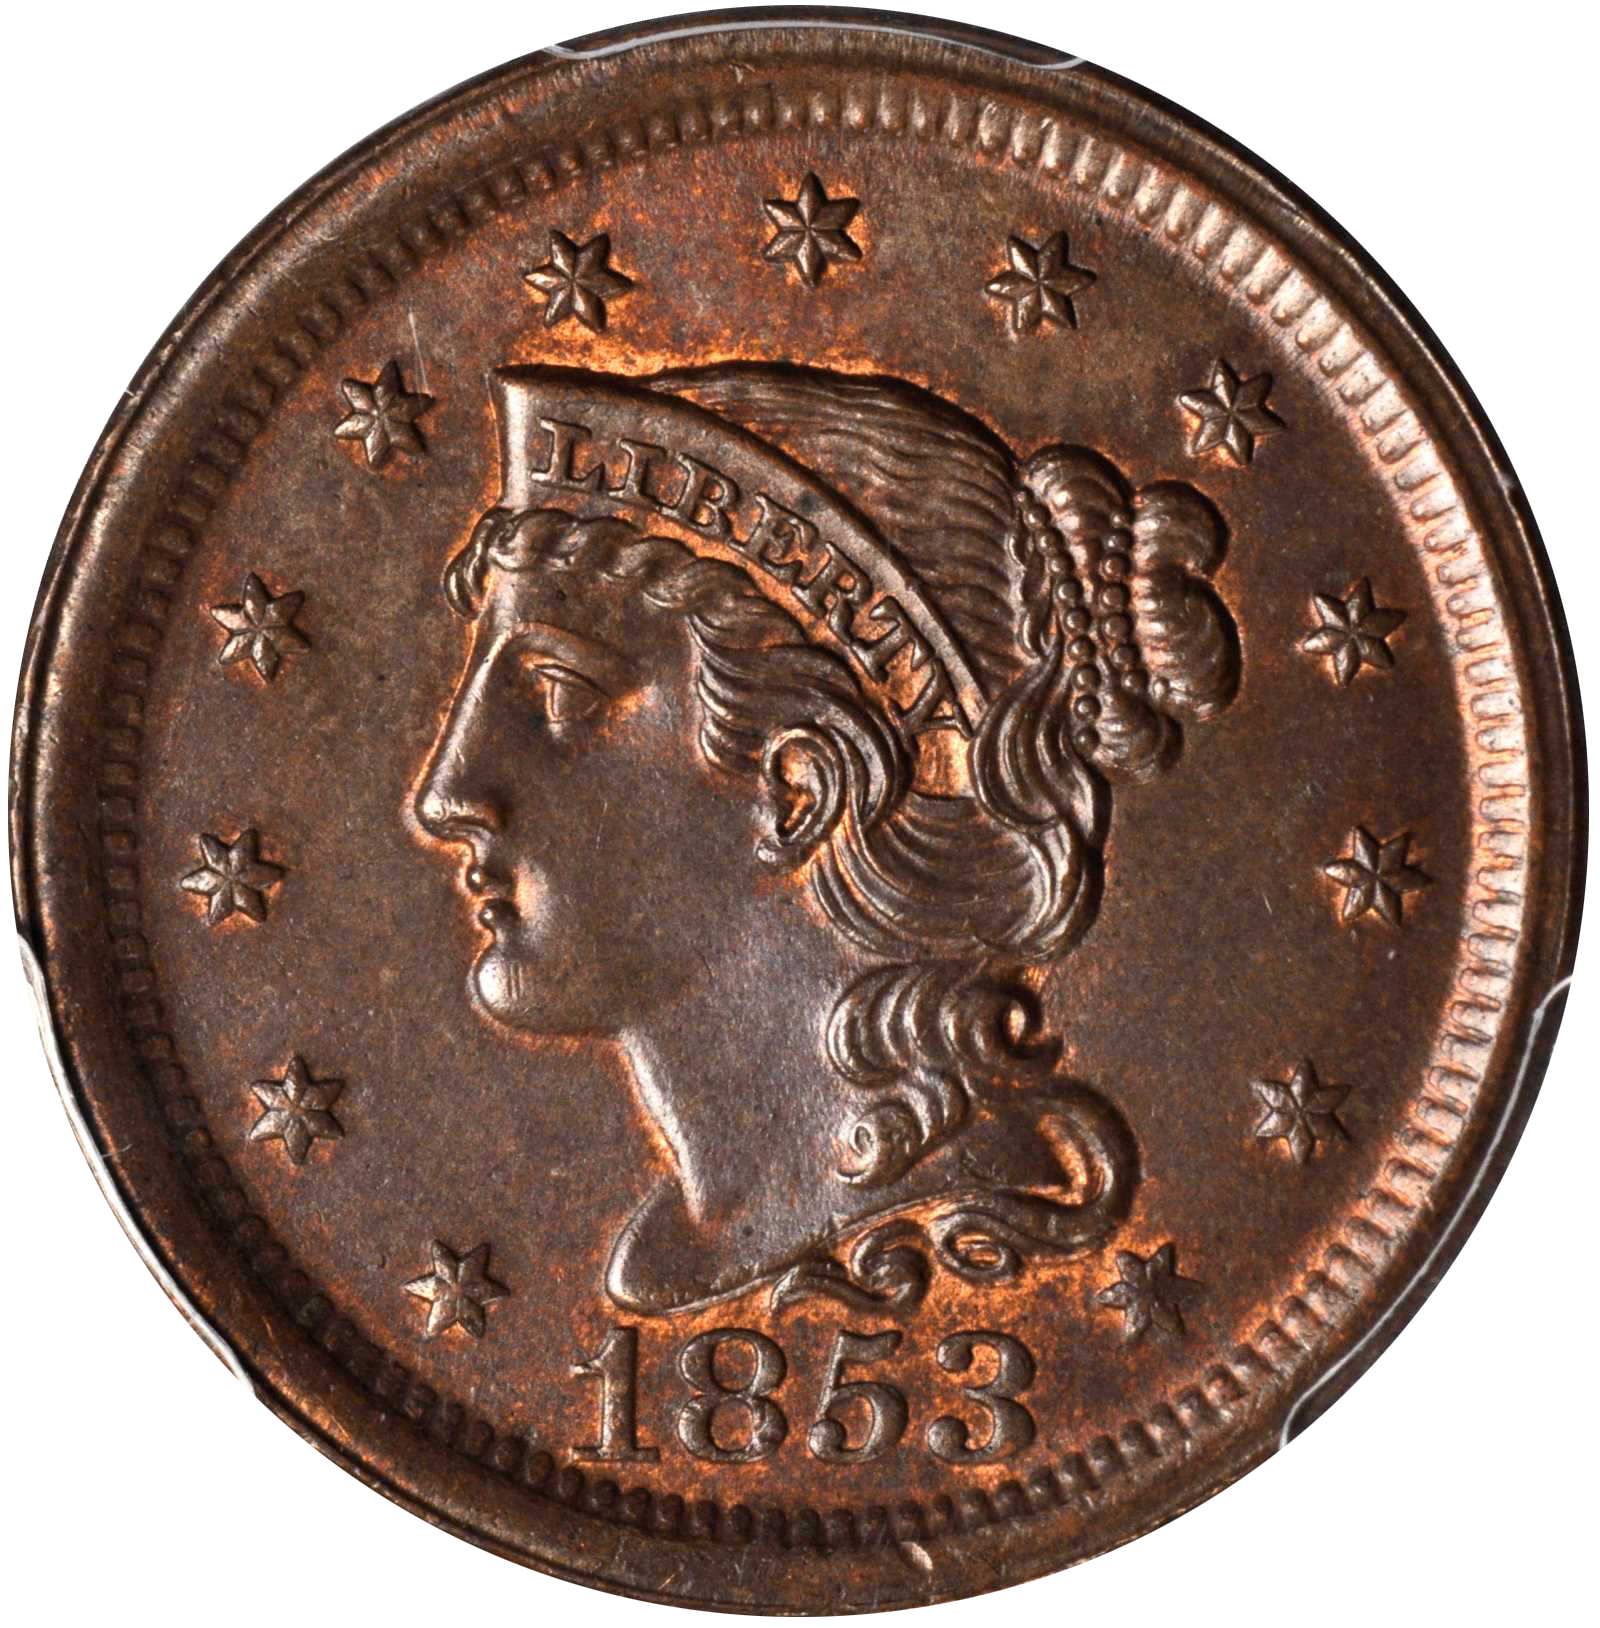 1853 1/2C, BN (Regular Strike) Braided Hair Half Cent - PCGS CoinFacts